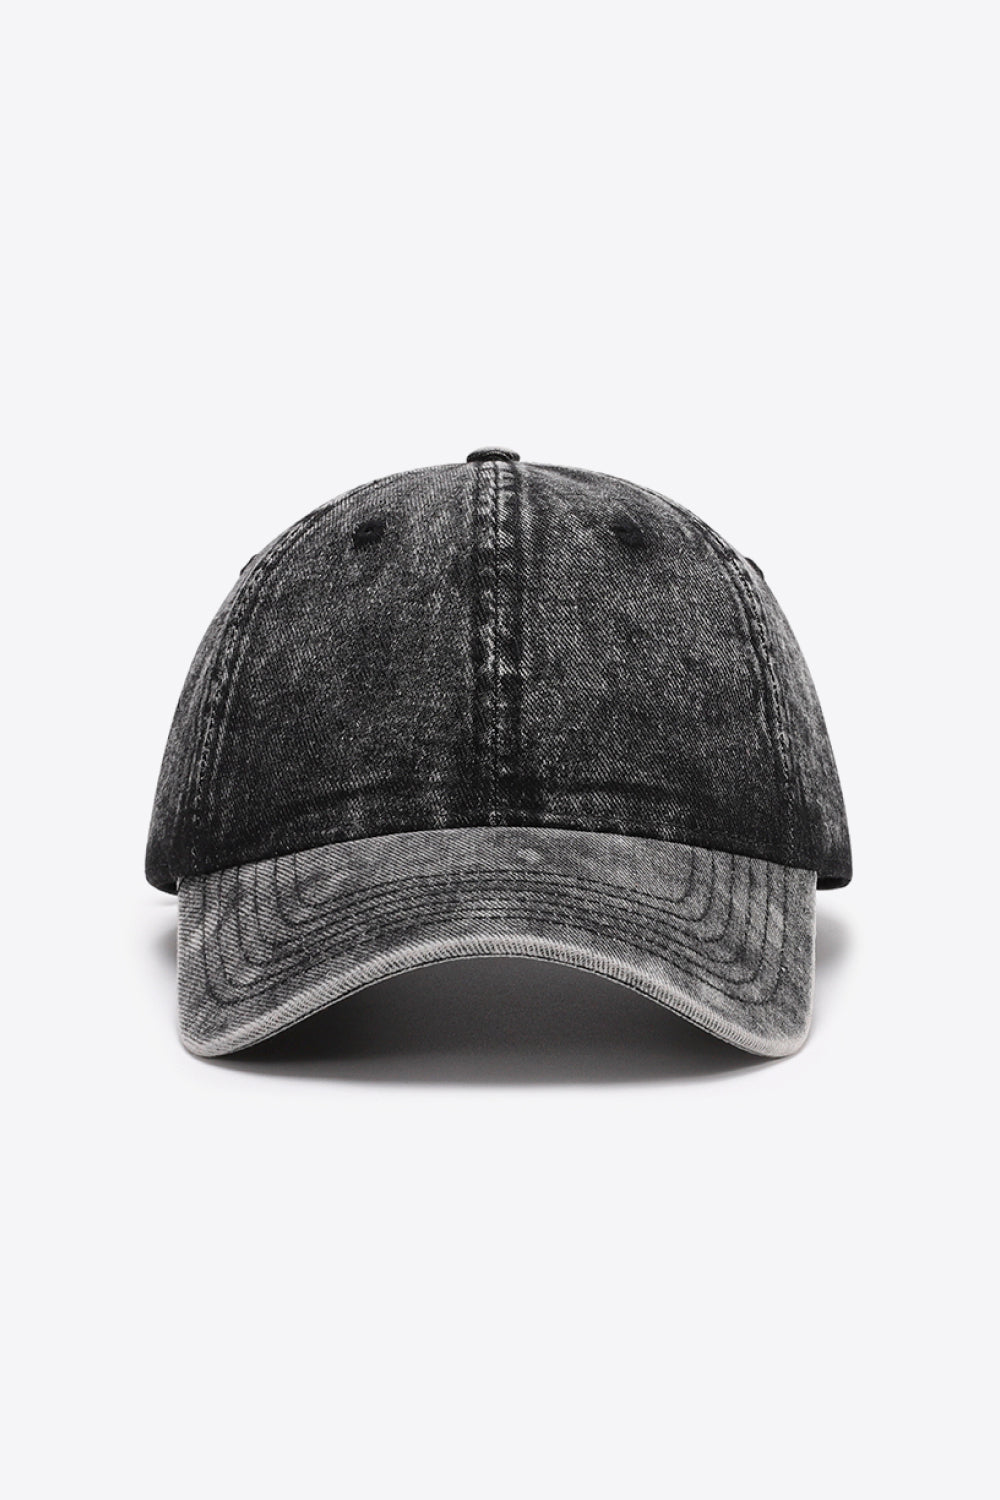 Denim Baseball Hat black front view